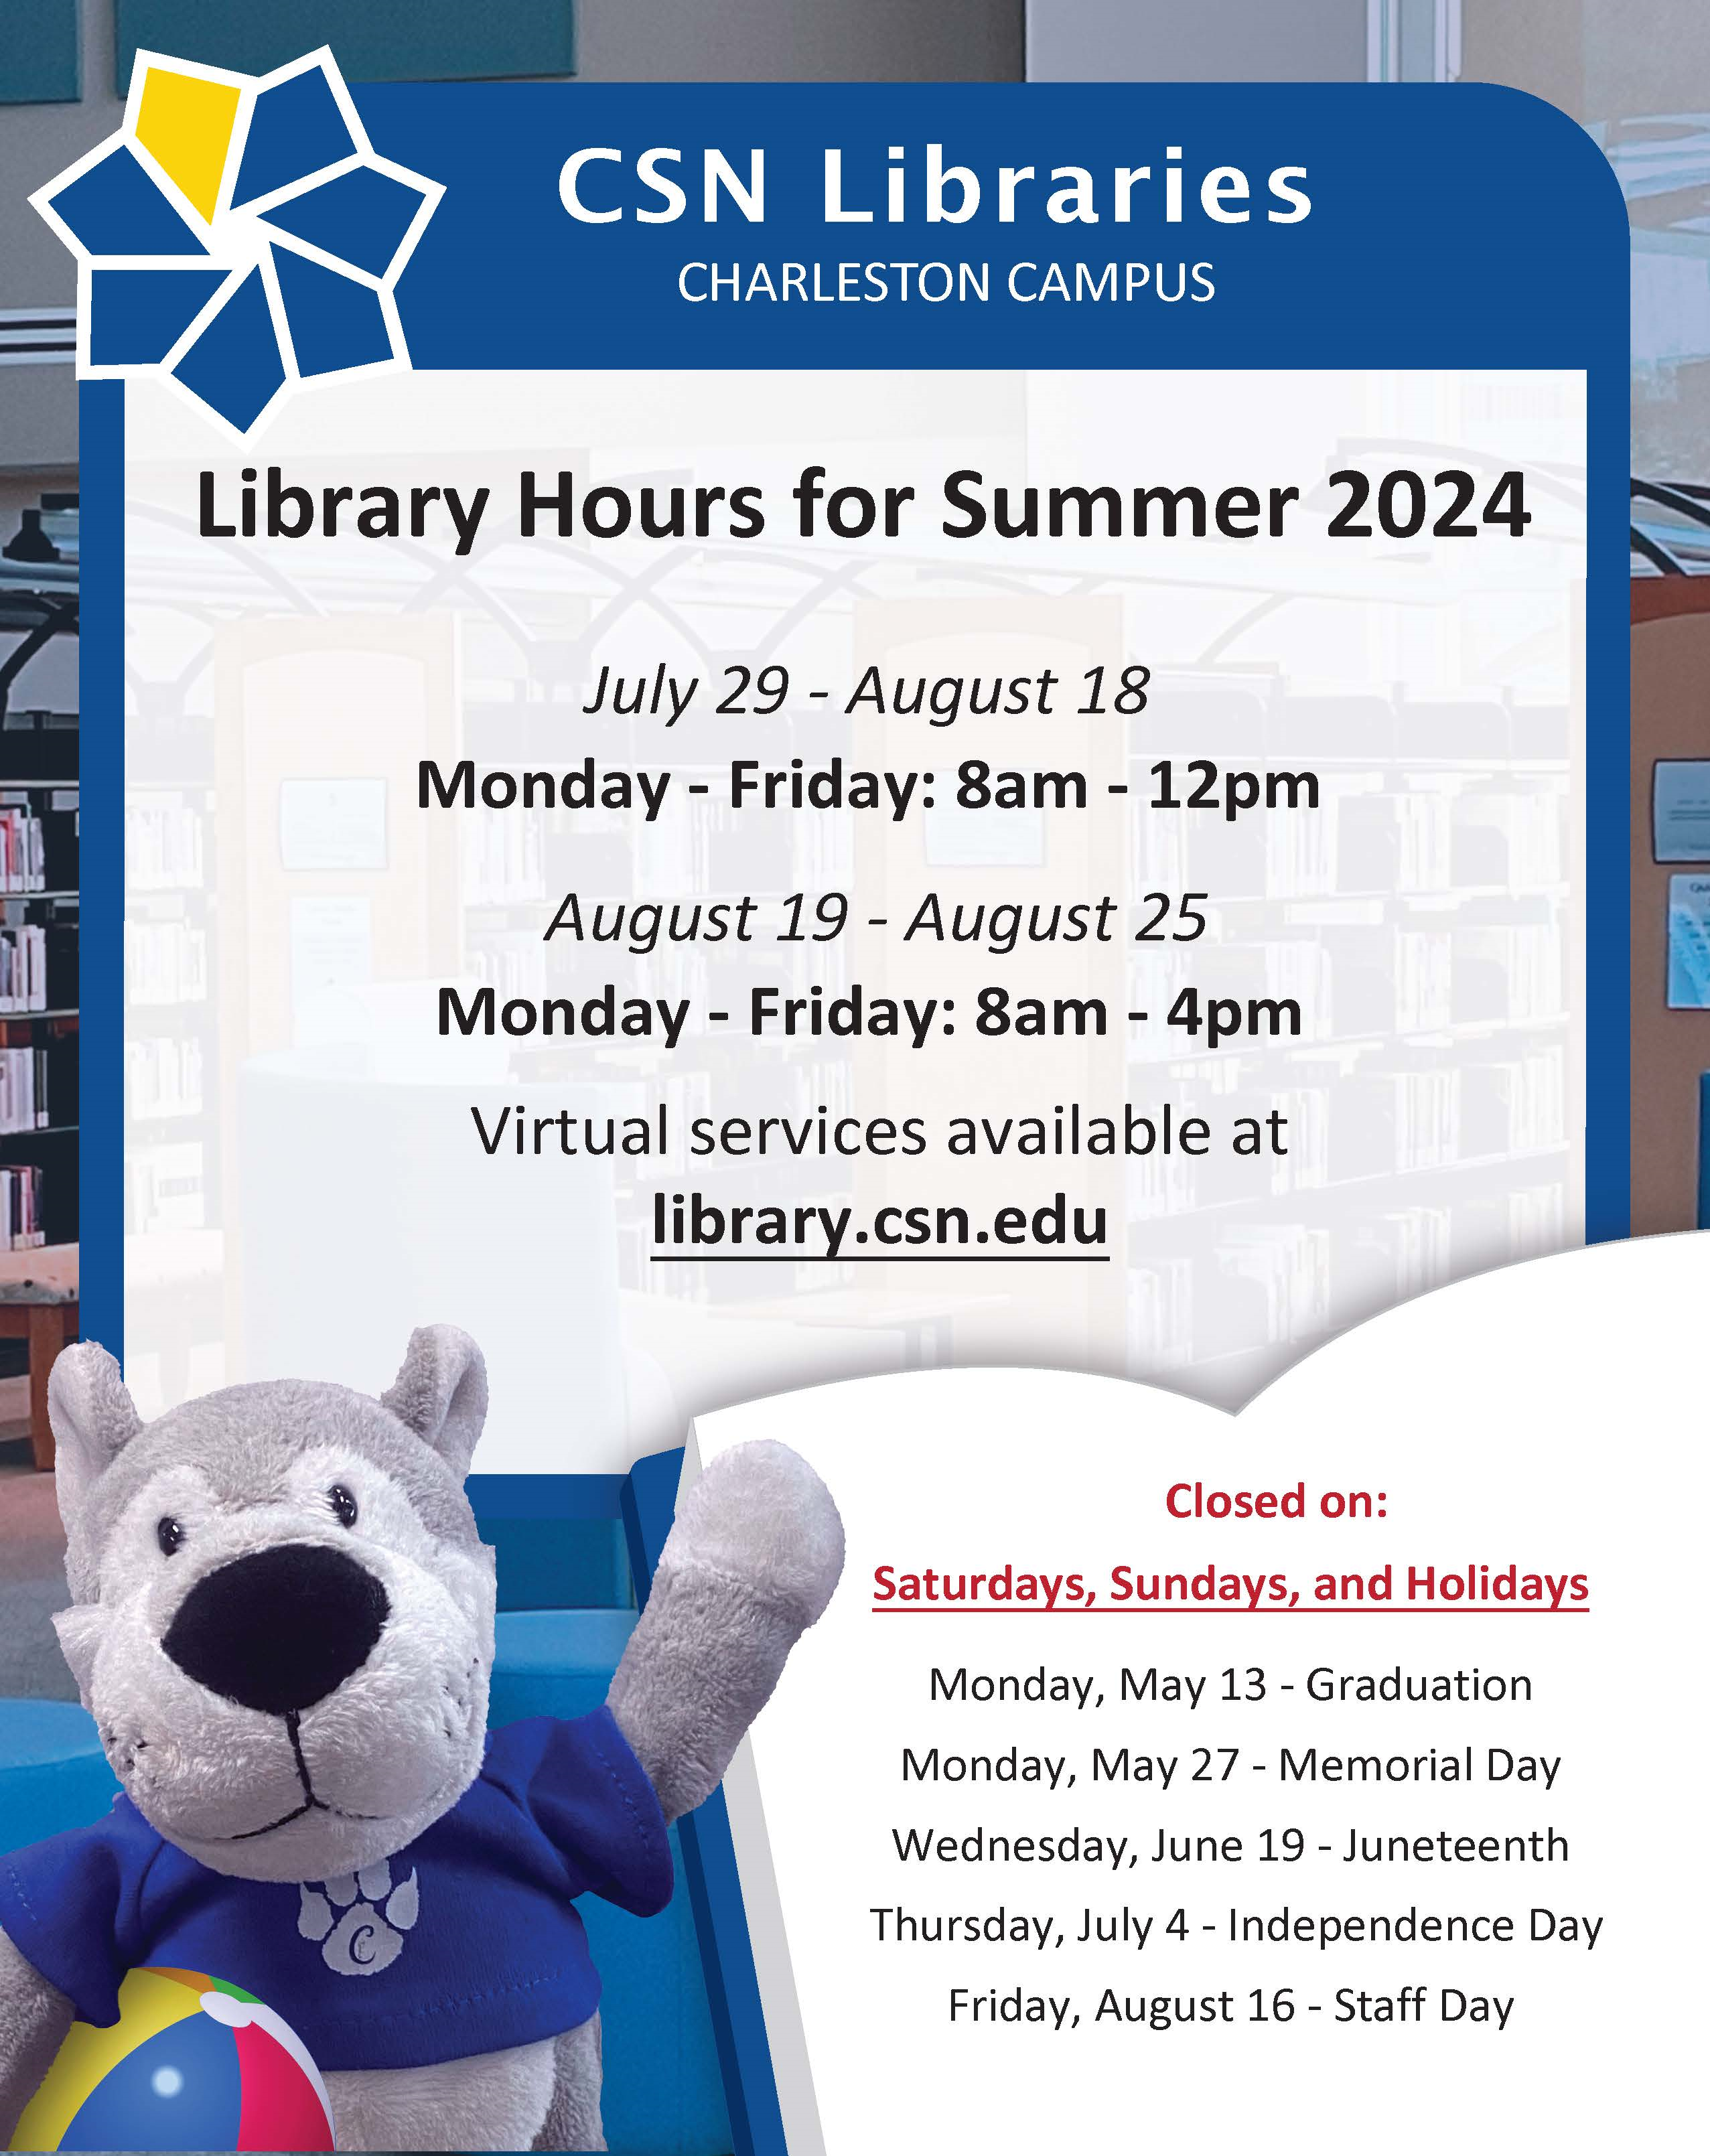 CSN Libraries Summer Hours - Charleston Campus - July 29-August 25